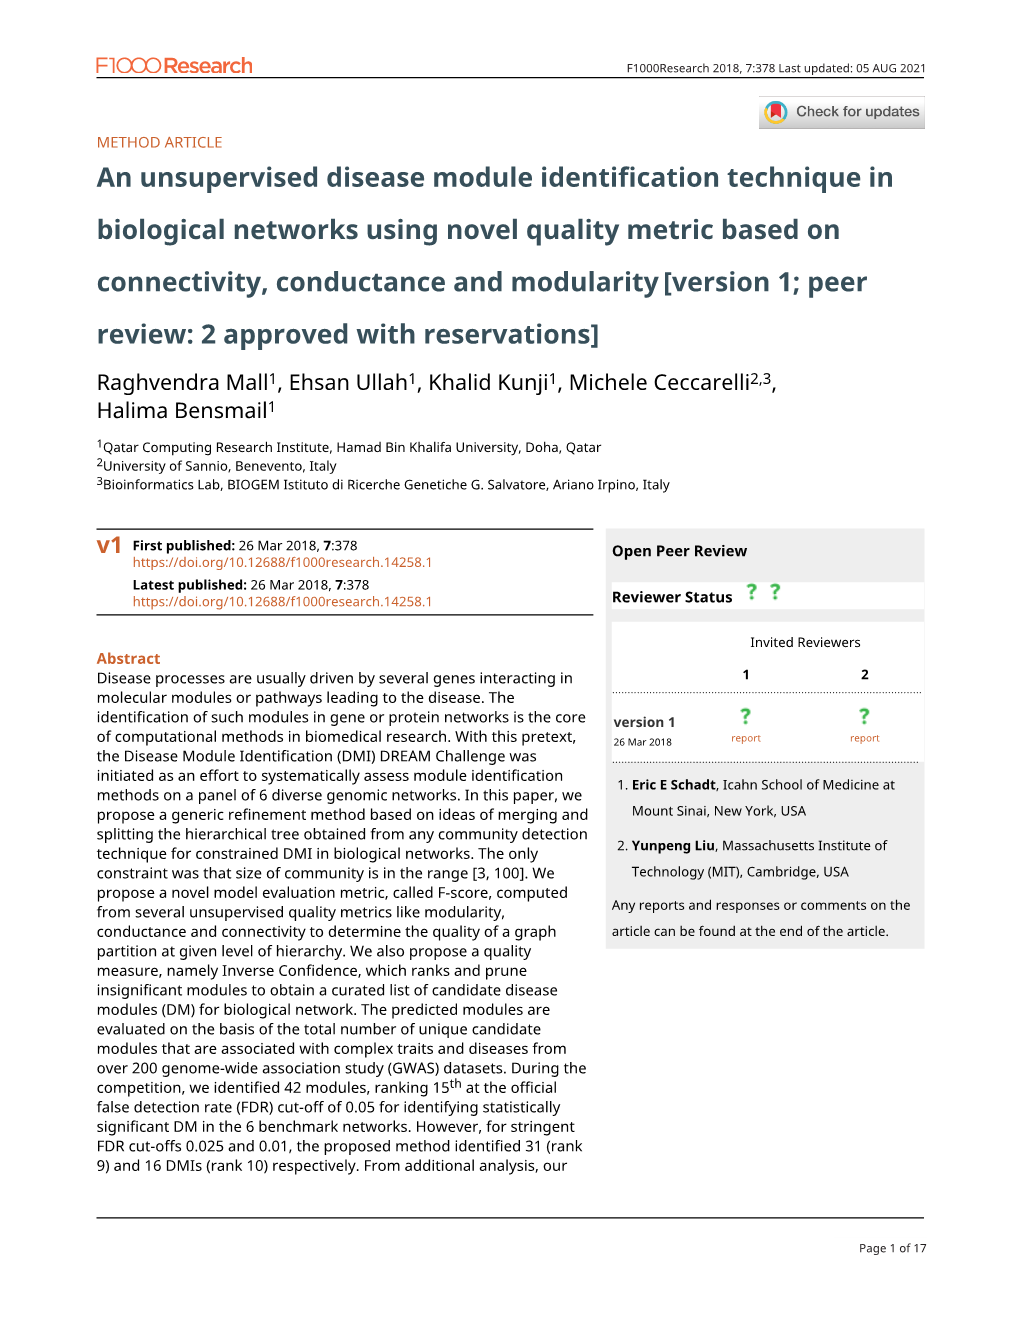 An Unsupervised Disease Module Identification